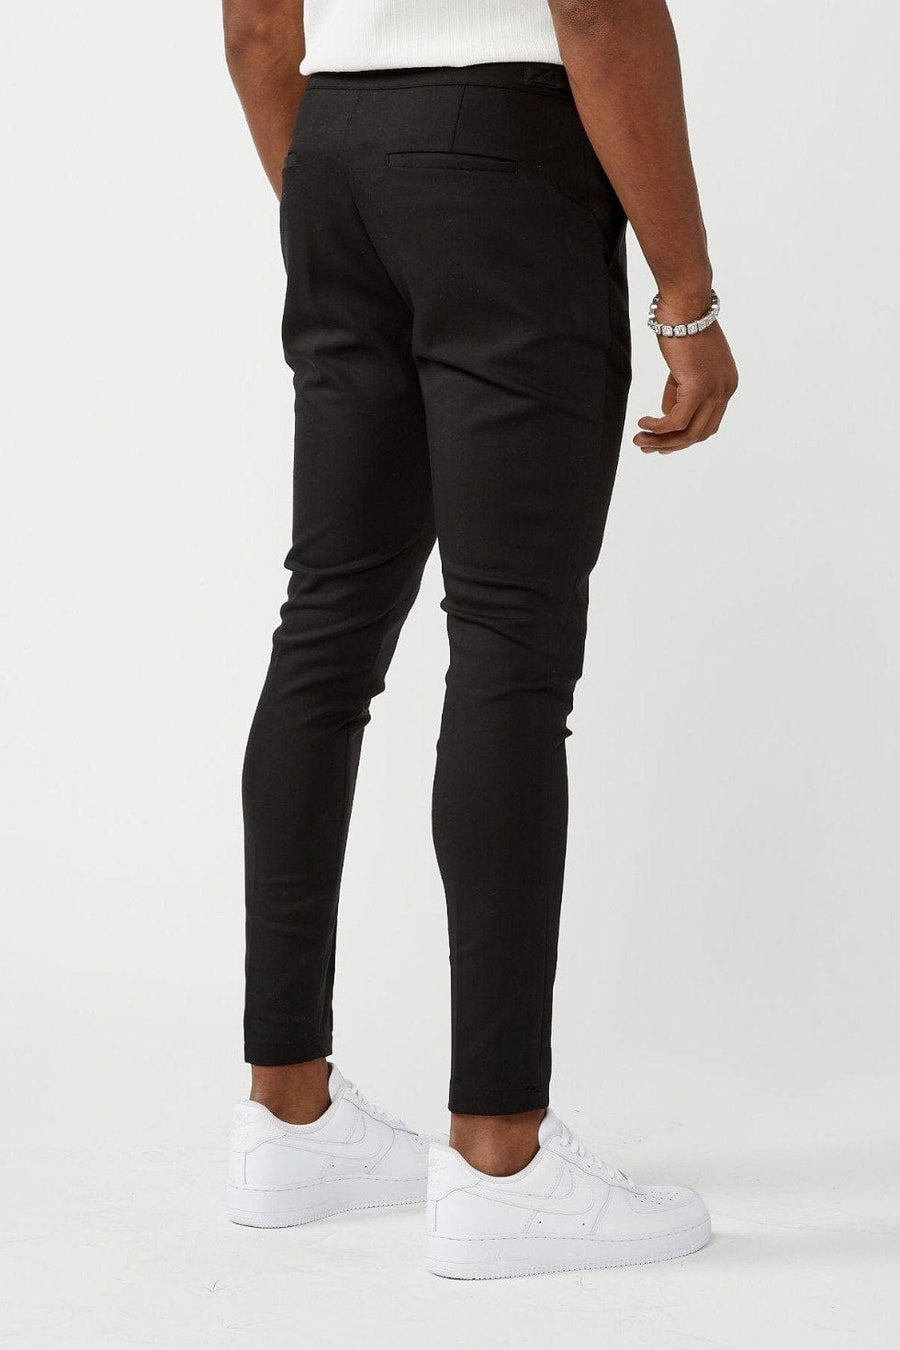 Legend London Trousers PLAIN STRETCH TROUSER W/ SIDE CINCH - BLACK